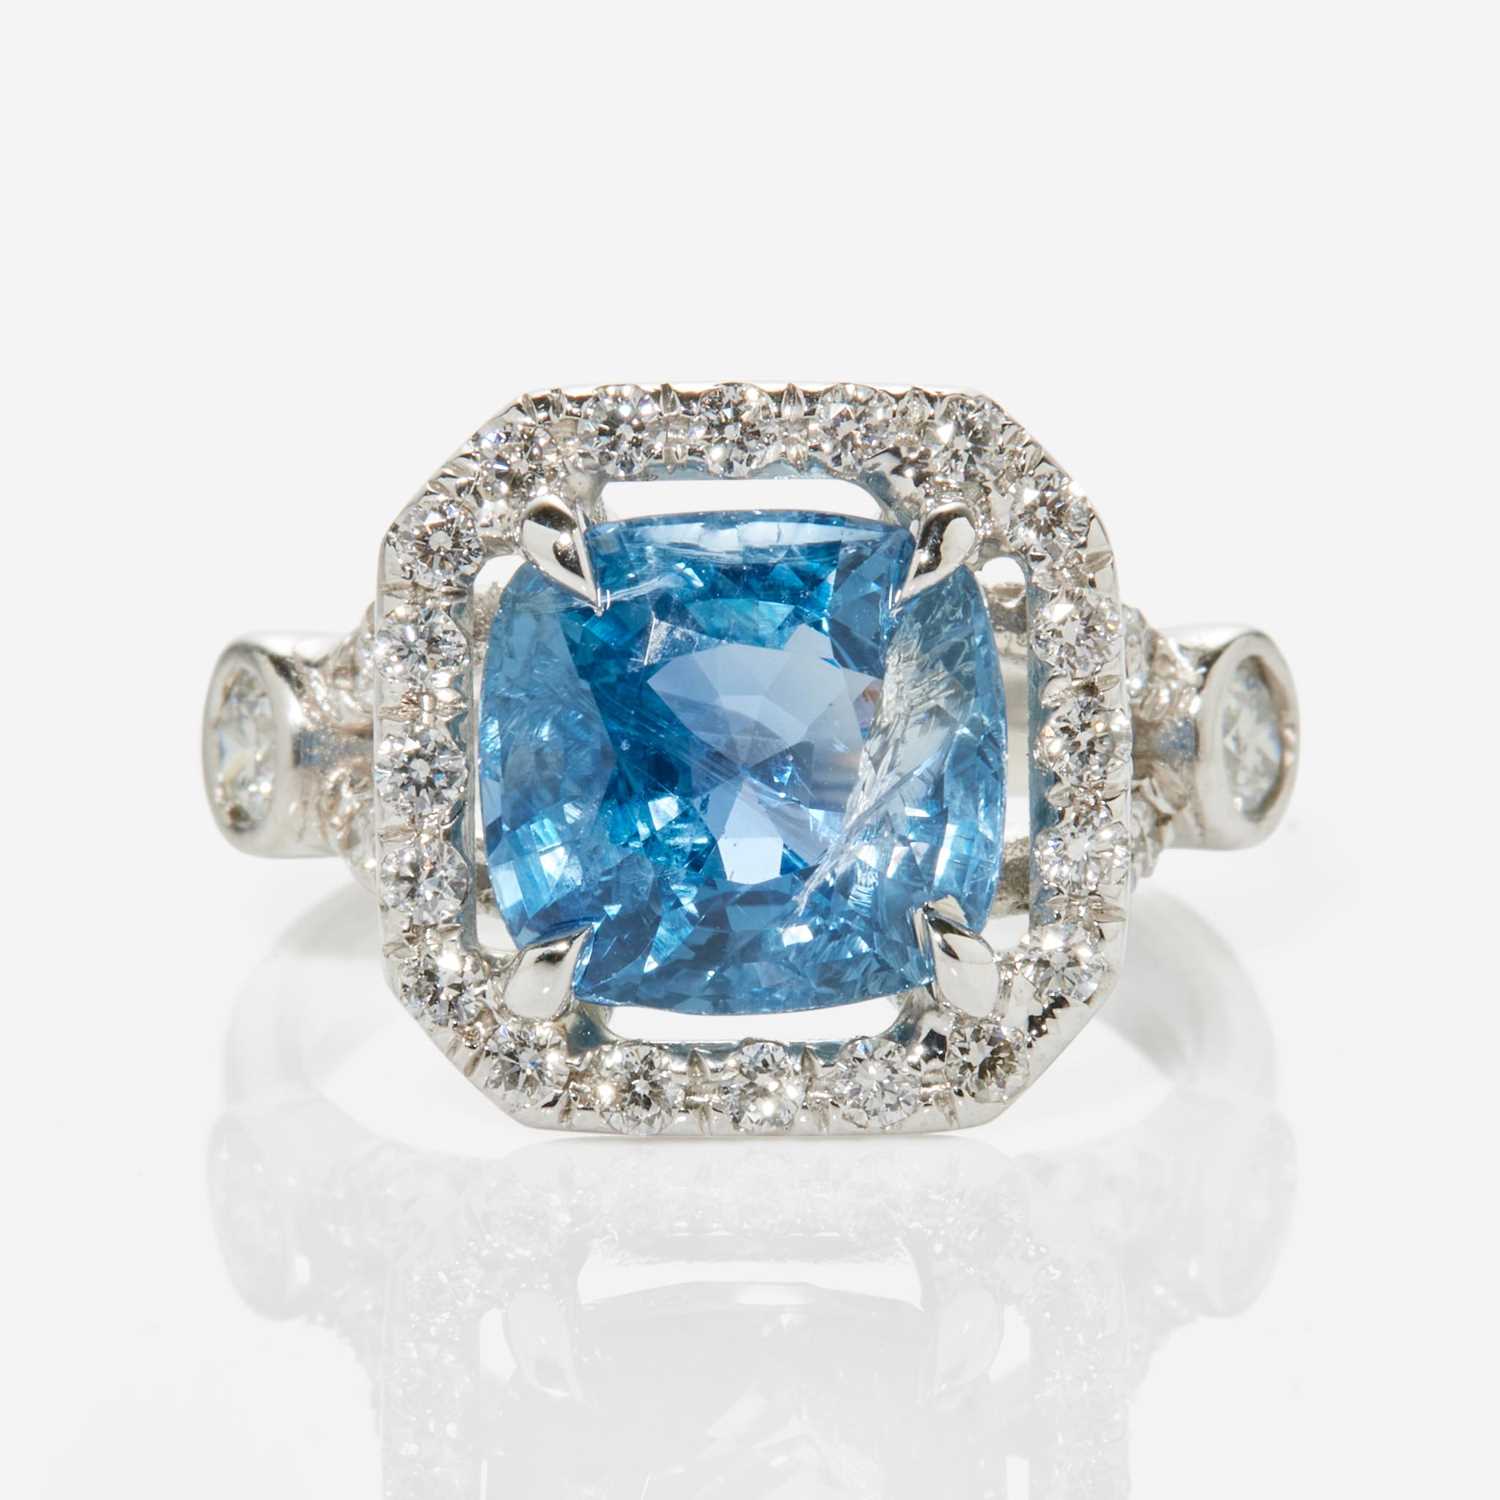 Lot 39 - A Platinum, Diamond, and Sapphire Ring